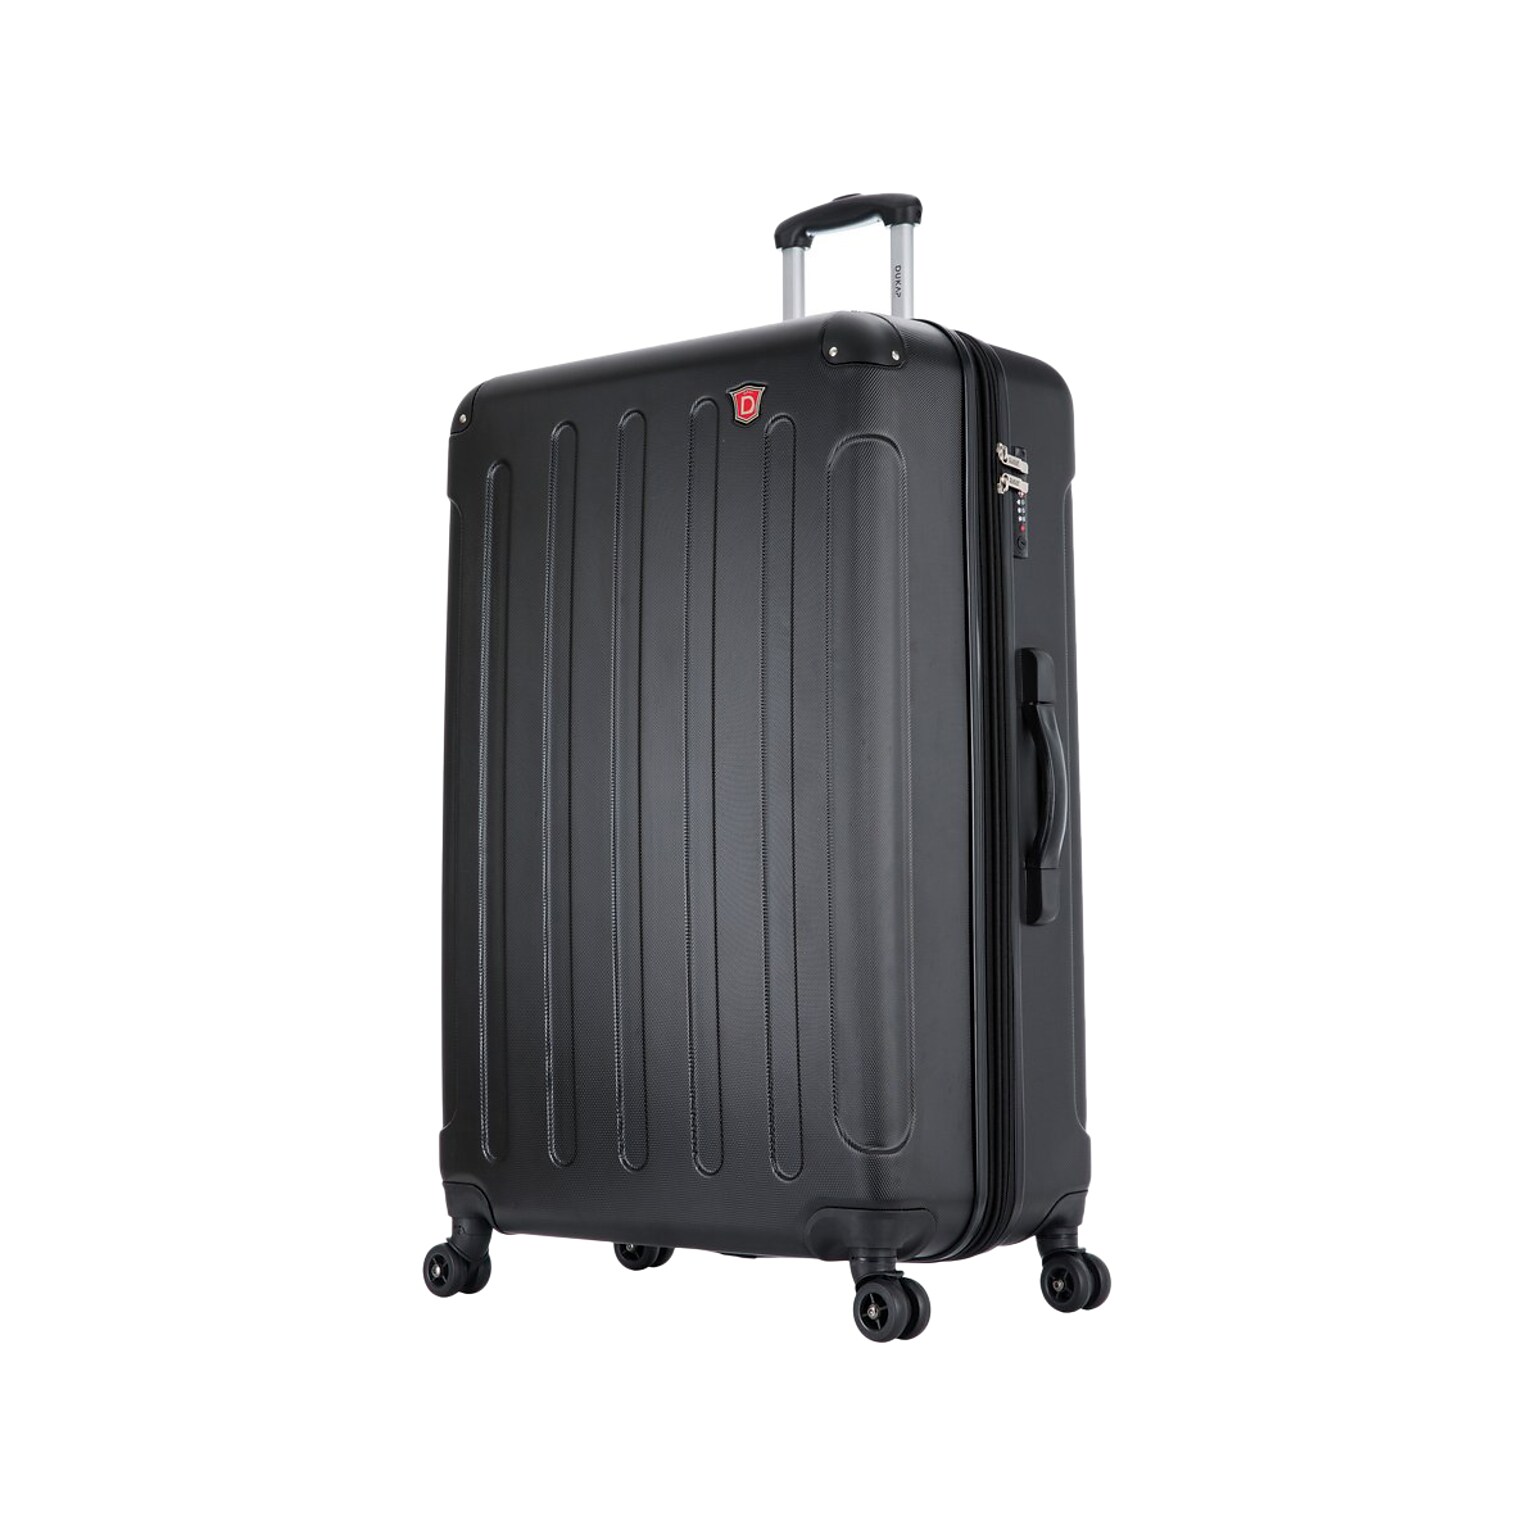 DUKAP Intely 31 Hardside Suitcase, 4-Wheeled Spinner, TSA Checkpoint Friendly, Black (DKINT00L-BLK)